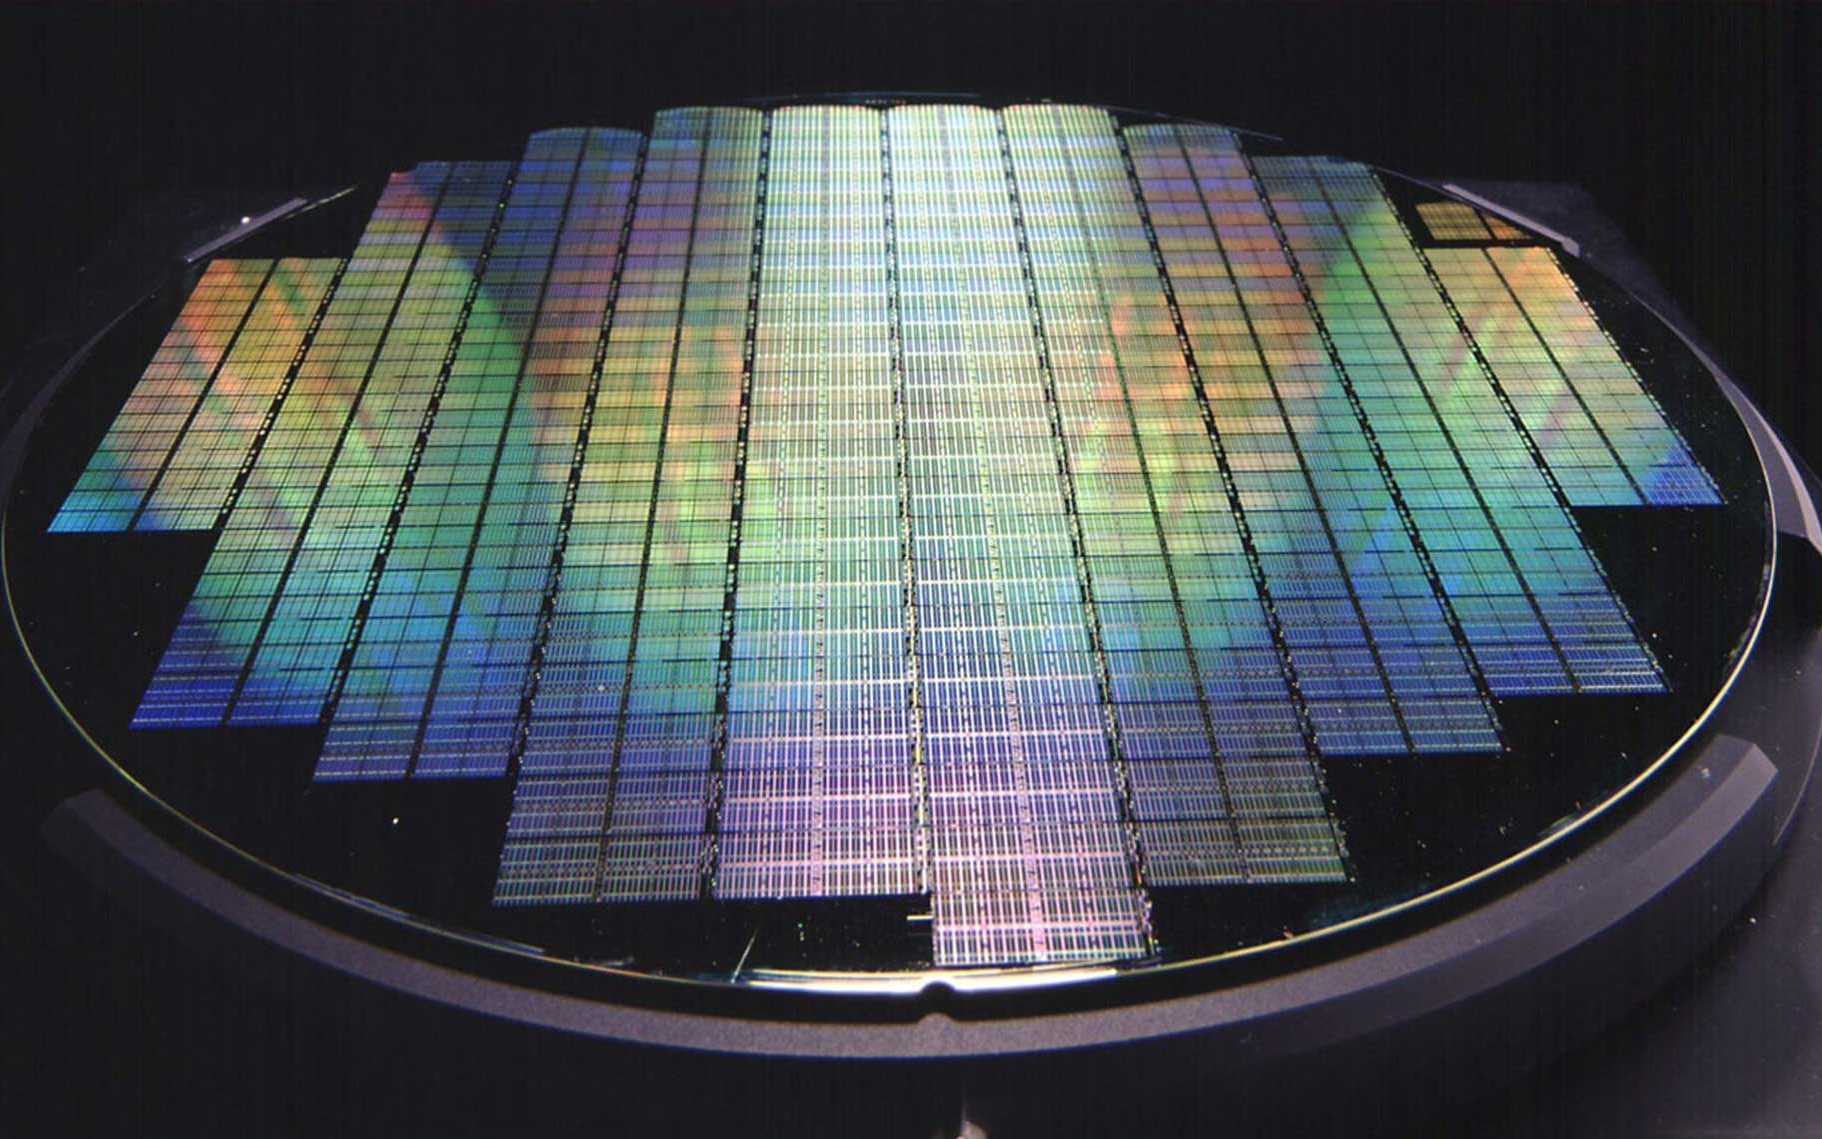 Semiconductor boards